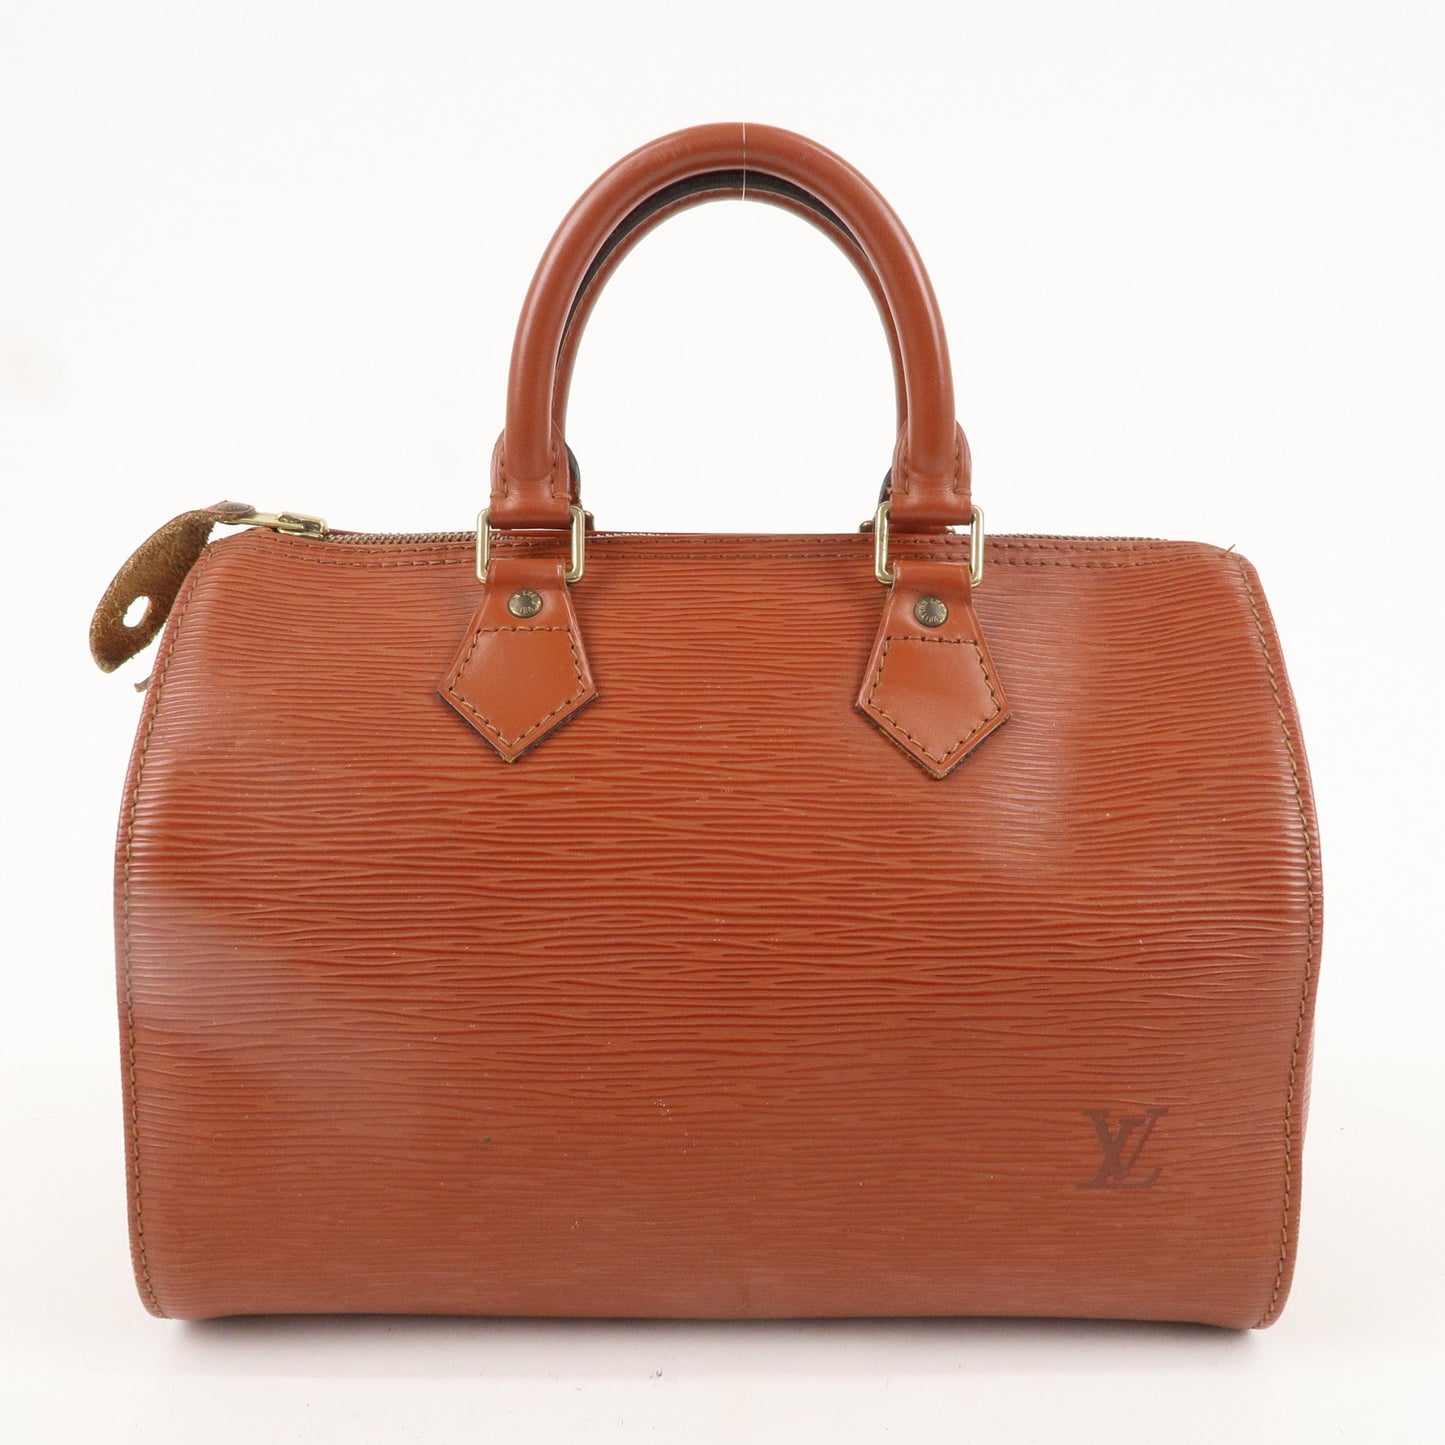 AuthenticLouis Vuitton Epi Speedy 25 Hand Boston Bag Kenya Brown M43013